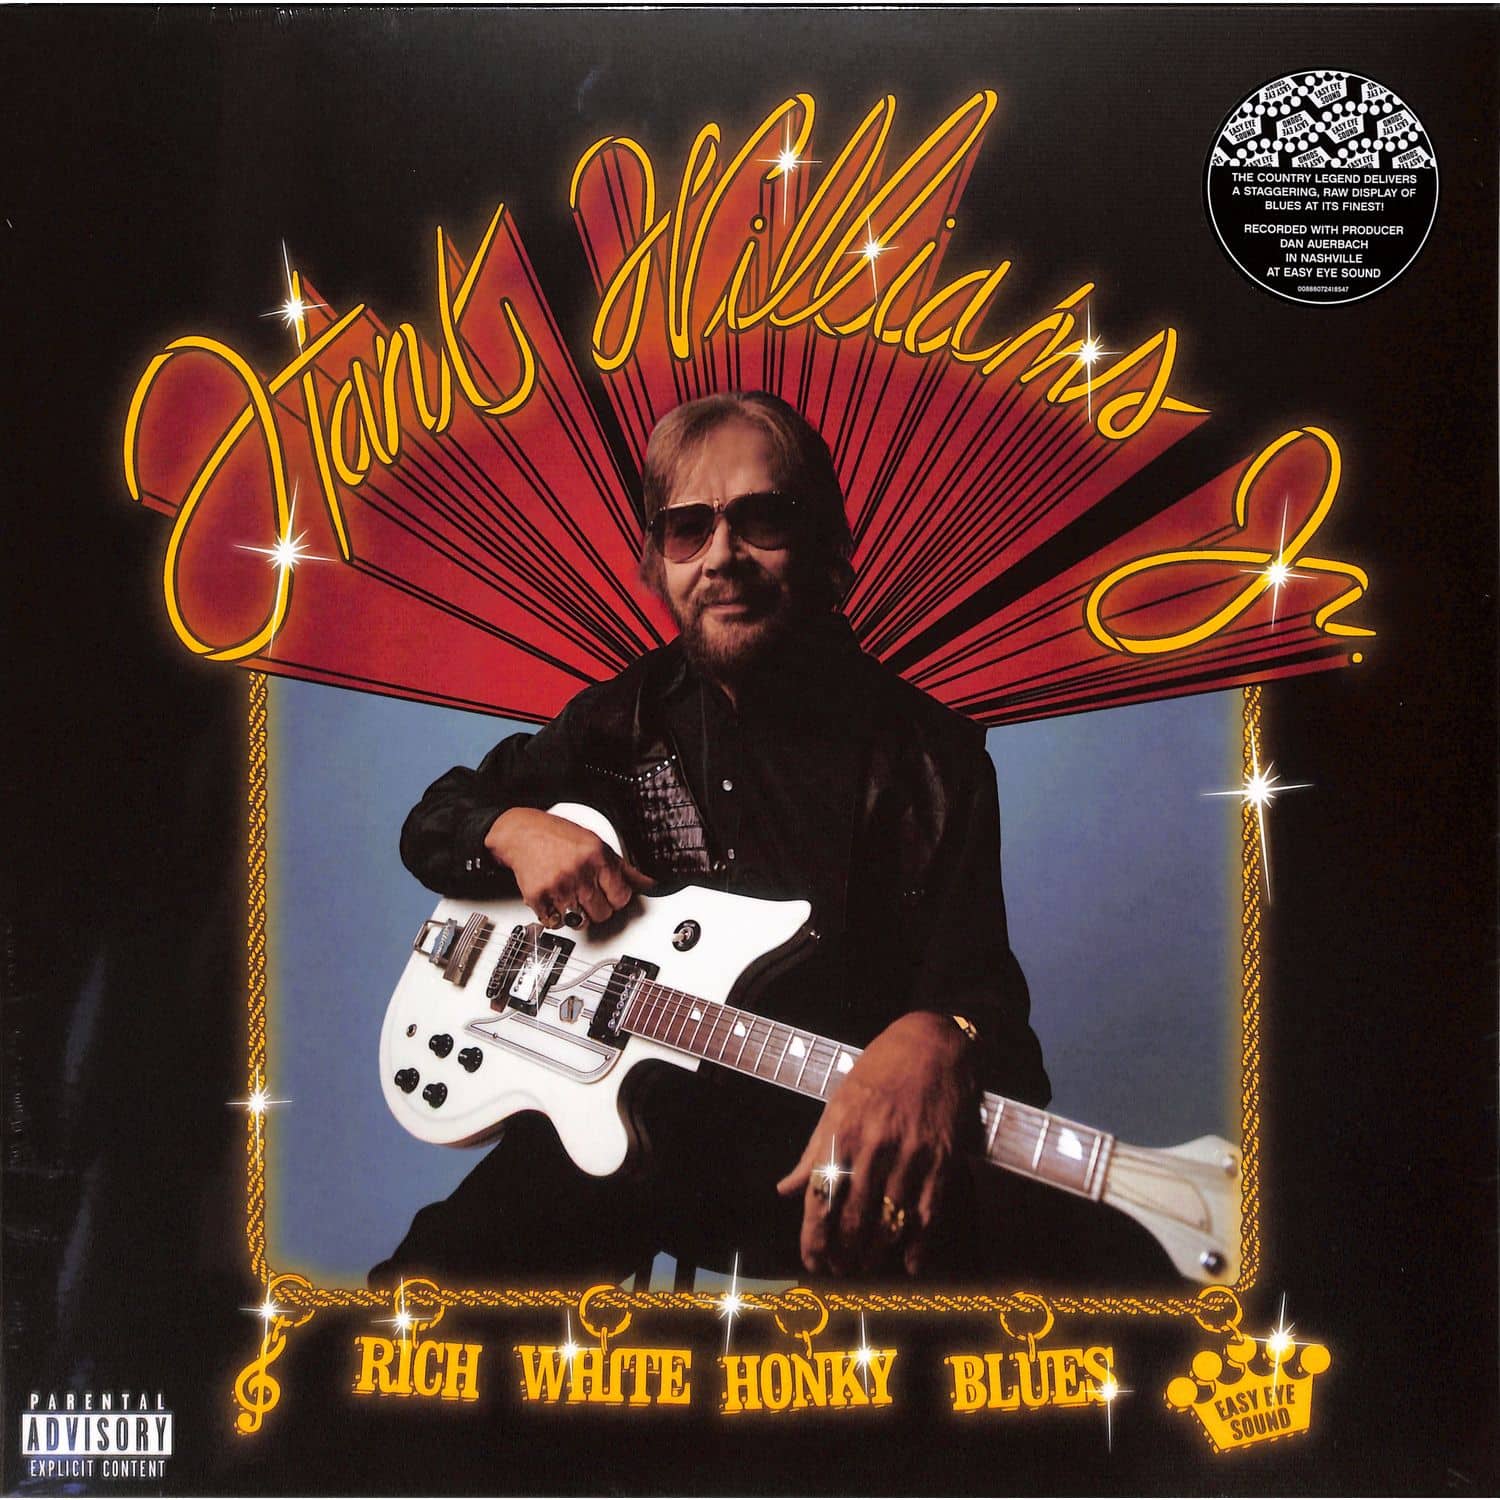 Hank Williams Jr. - RICH WHITE HONKY BLUES 